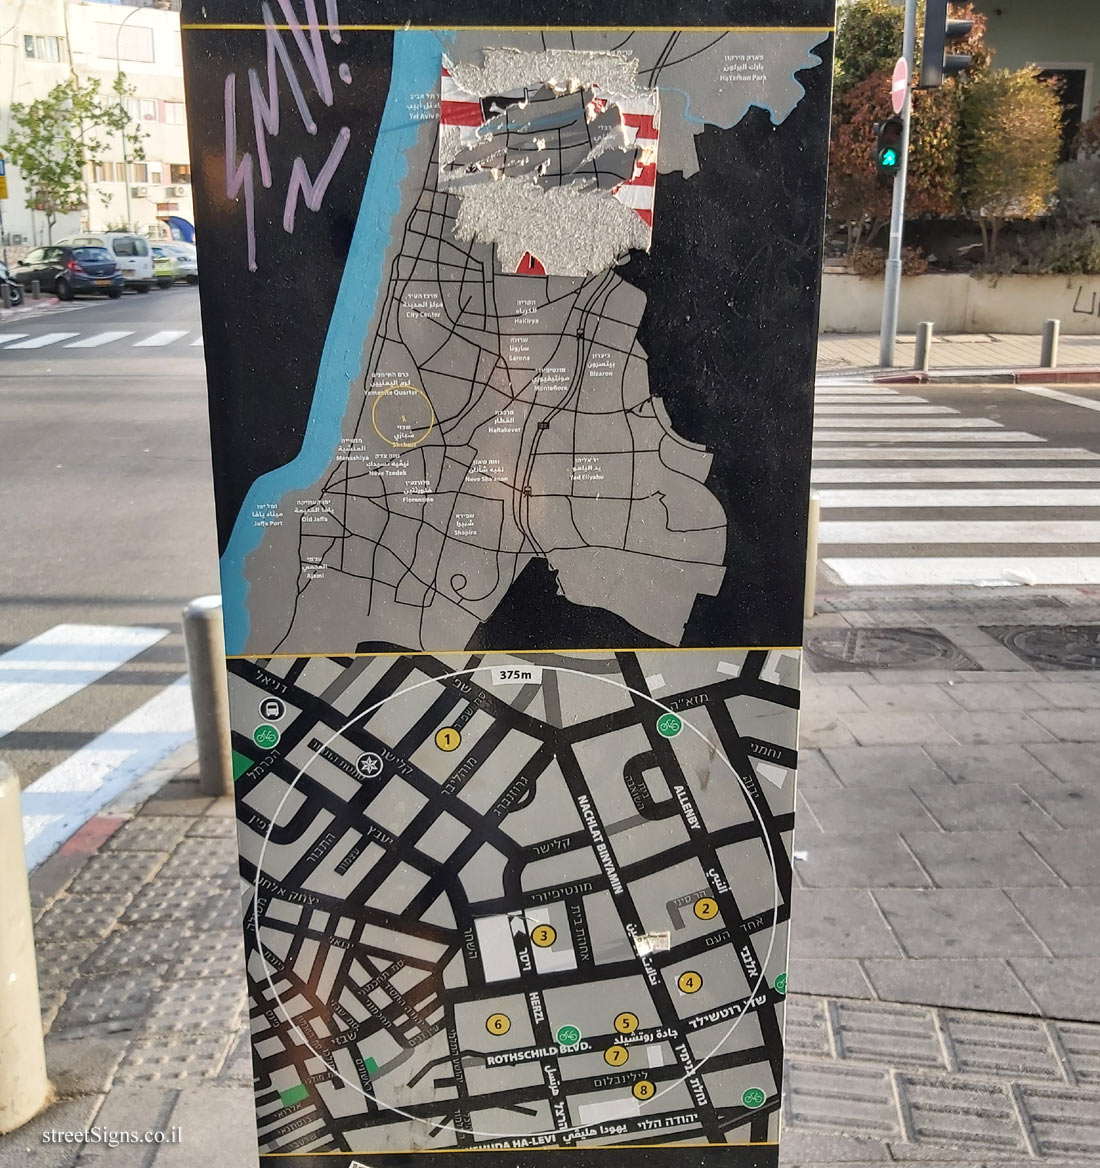 Tel Aviv - Ahuzat Bayit (the other side of the sign) - Montefiore St 7, Tel Aviv-Yafo, Israel